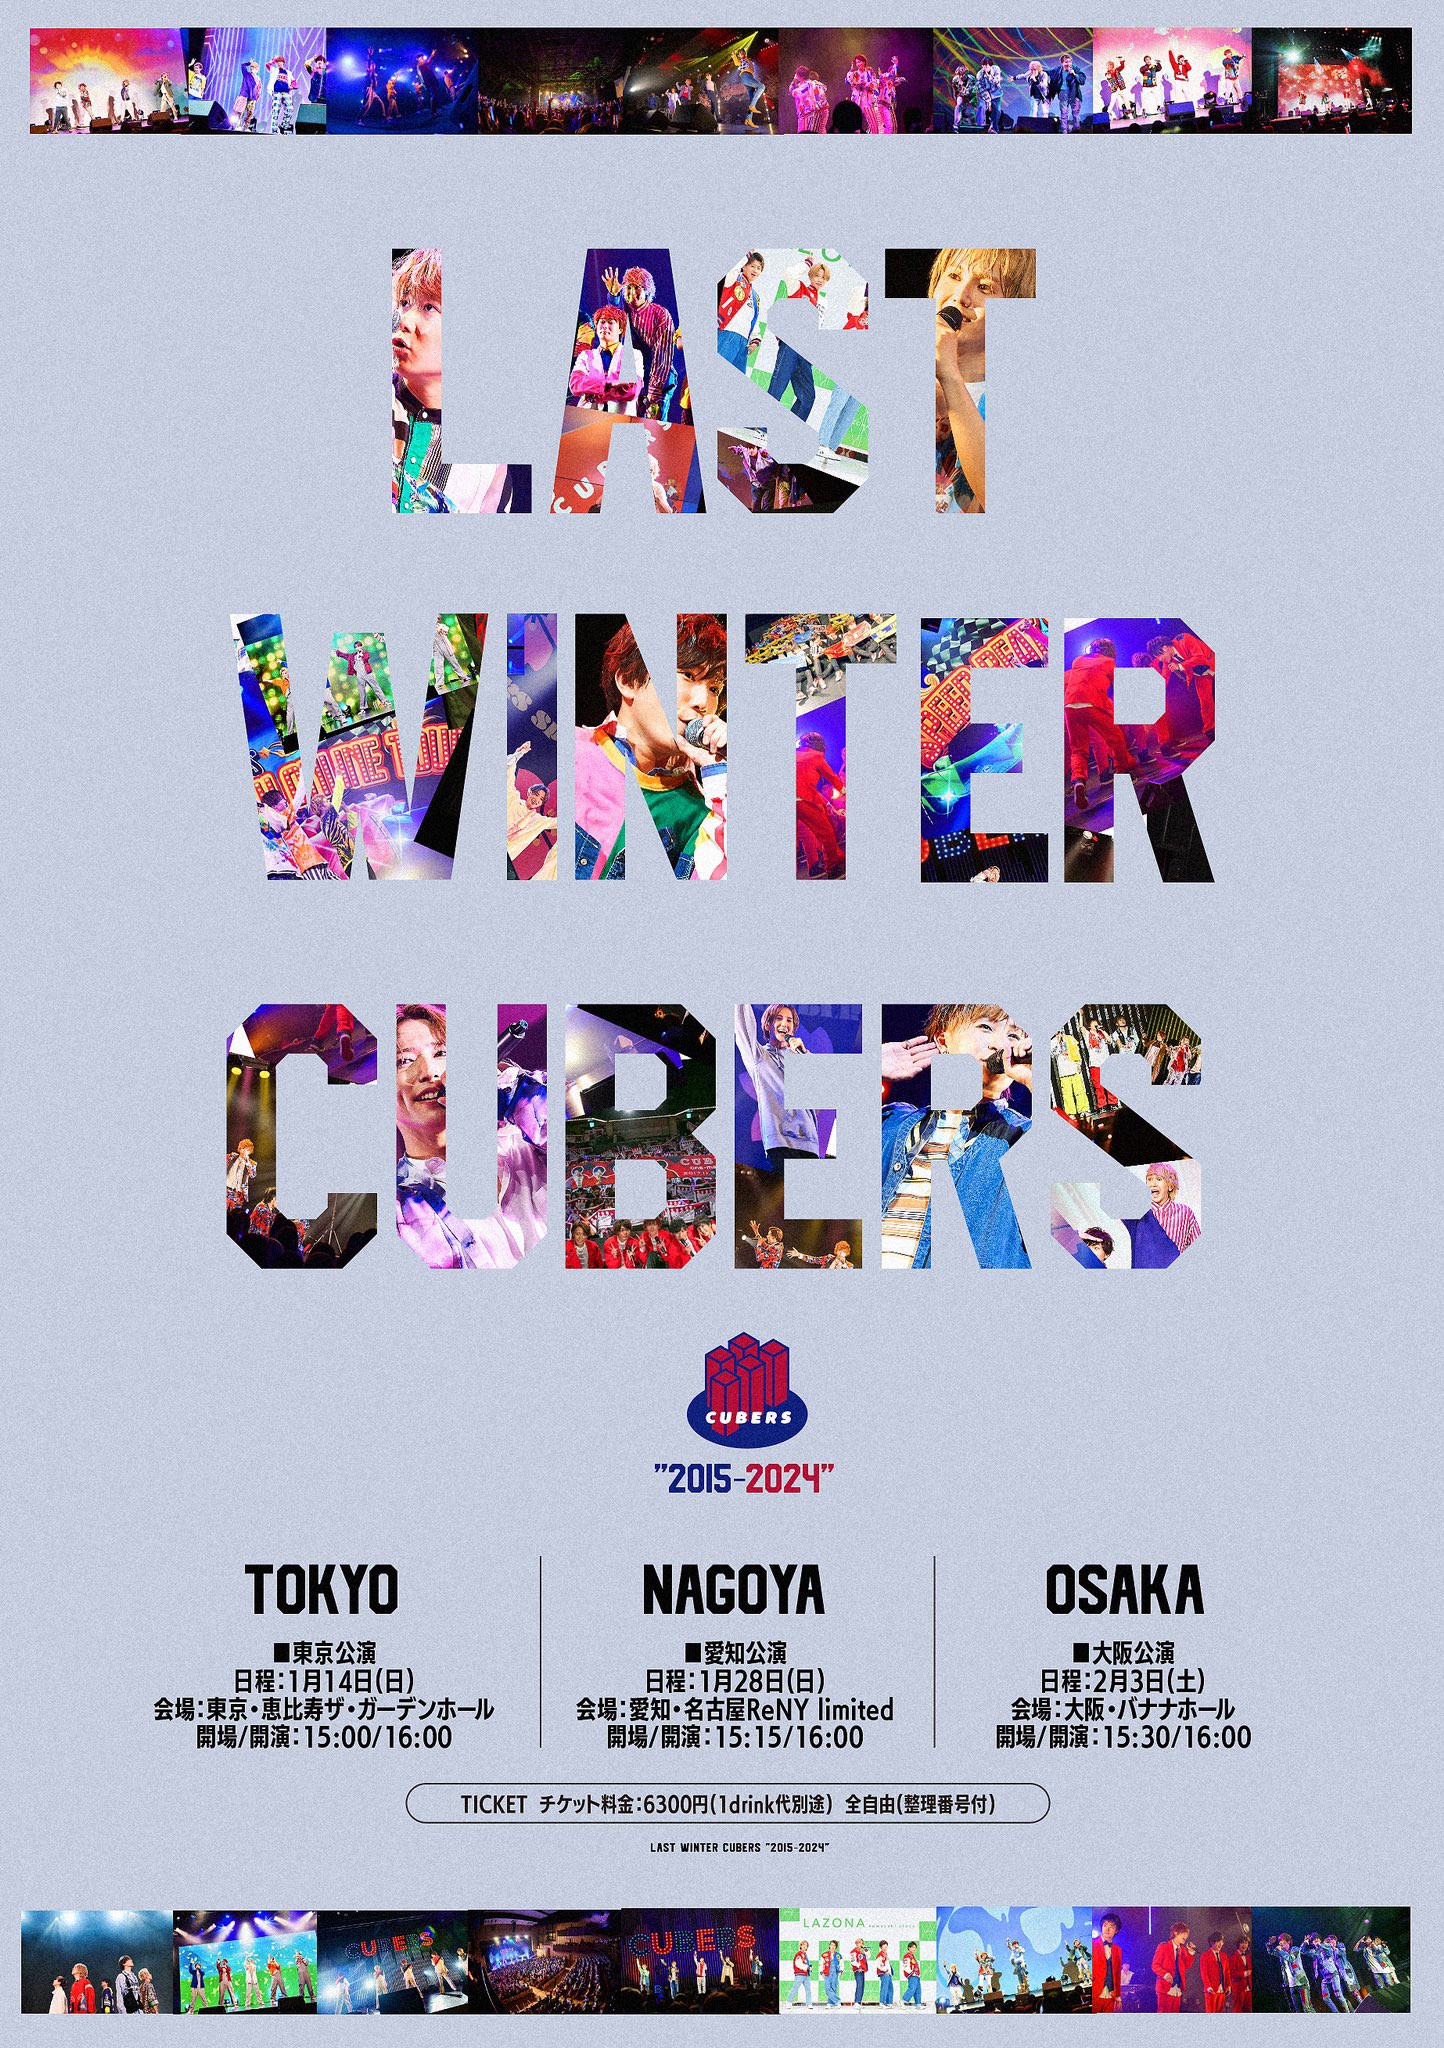 【BIG NEWS】来年1月14日(日)より東名阪にて「LAST WINTER CUBERS “2015-2024”」開催決定！